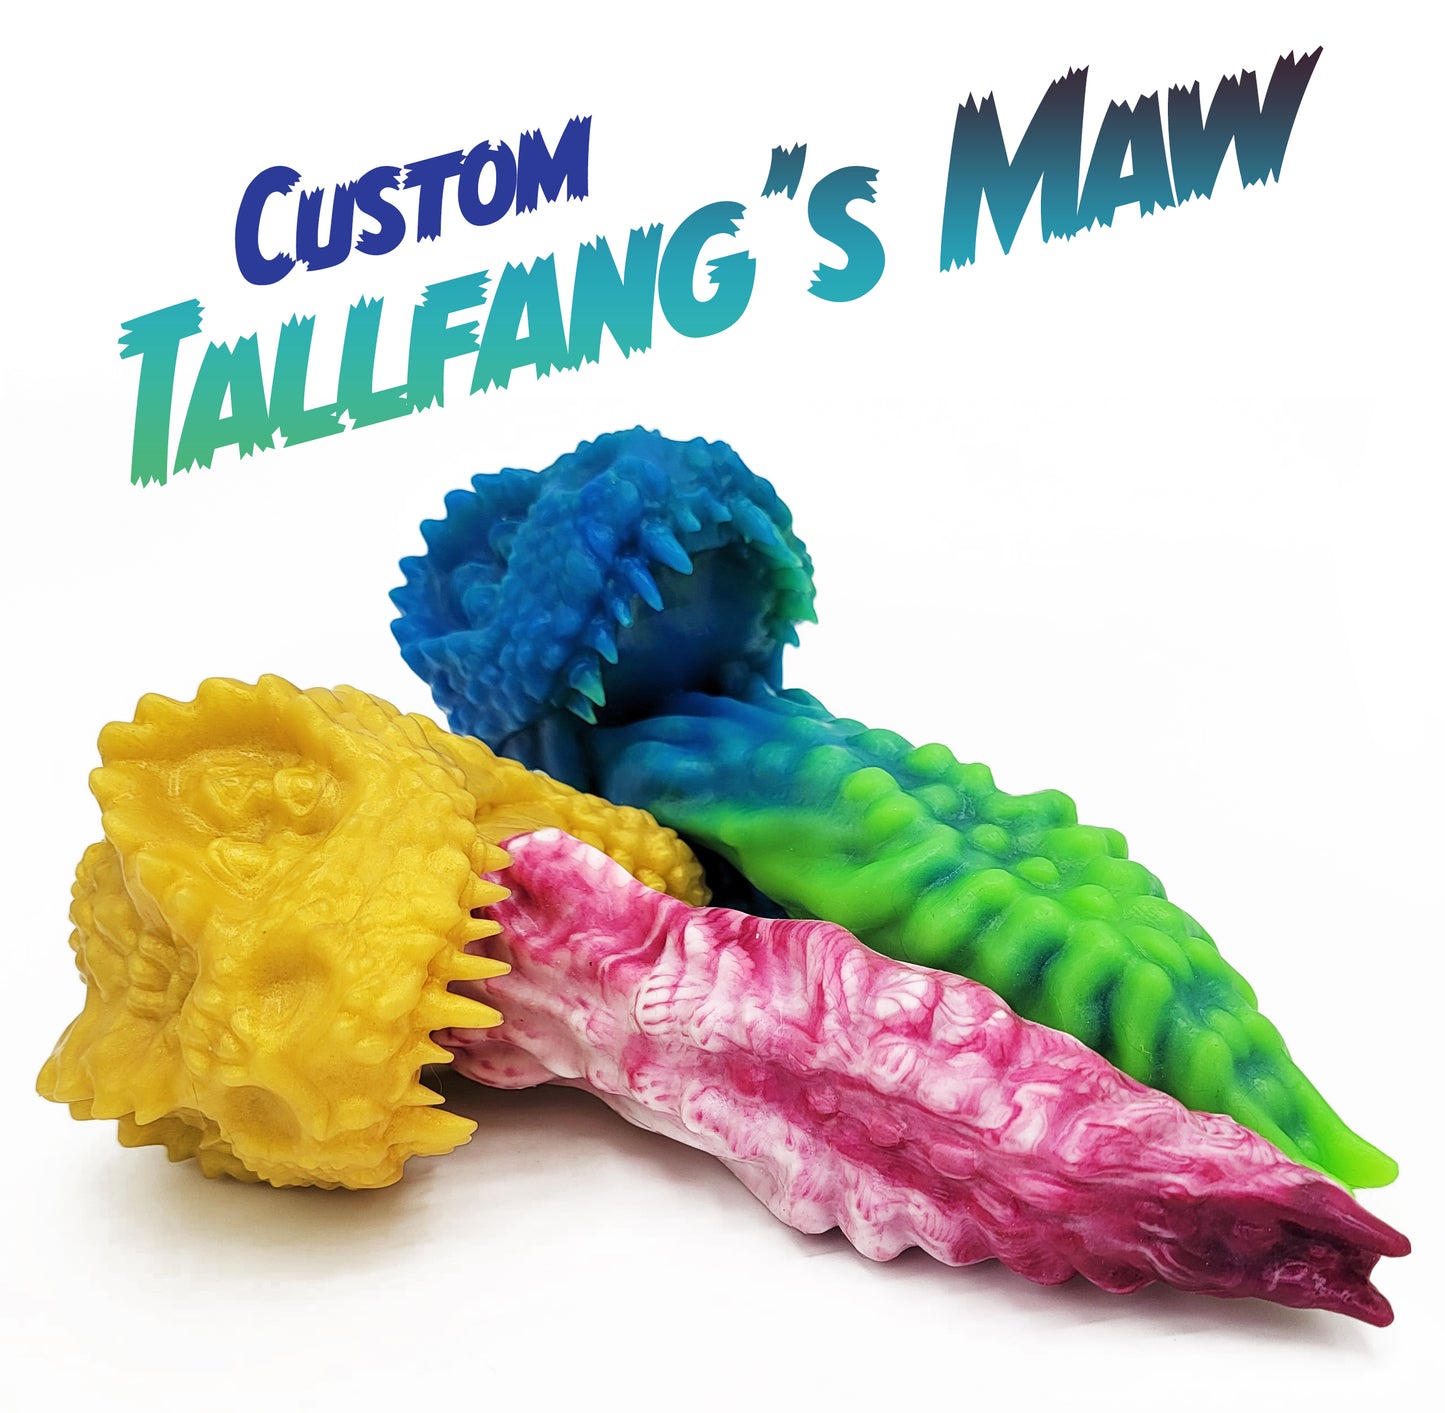 Custom Tallfang's Maw